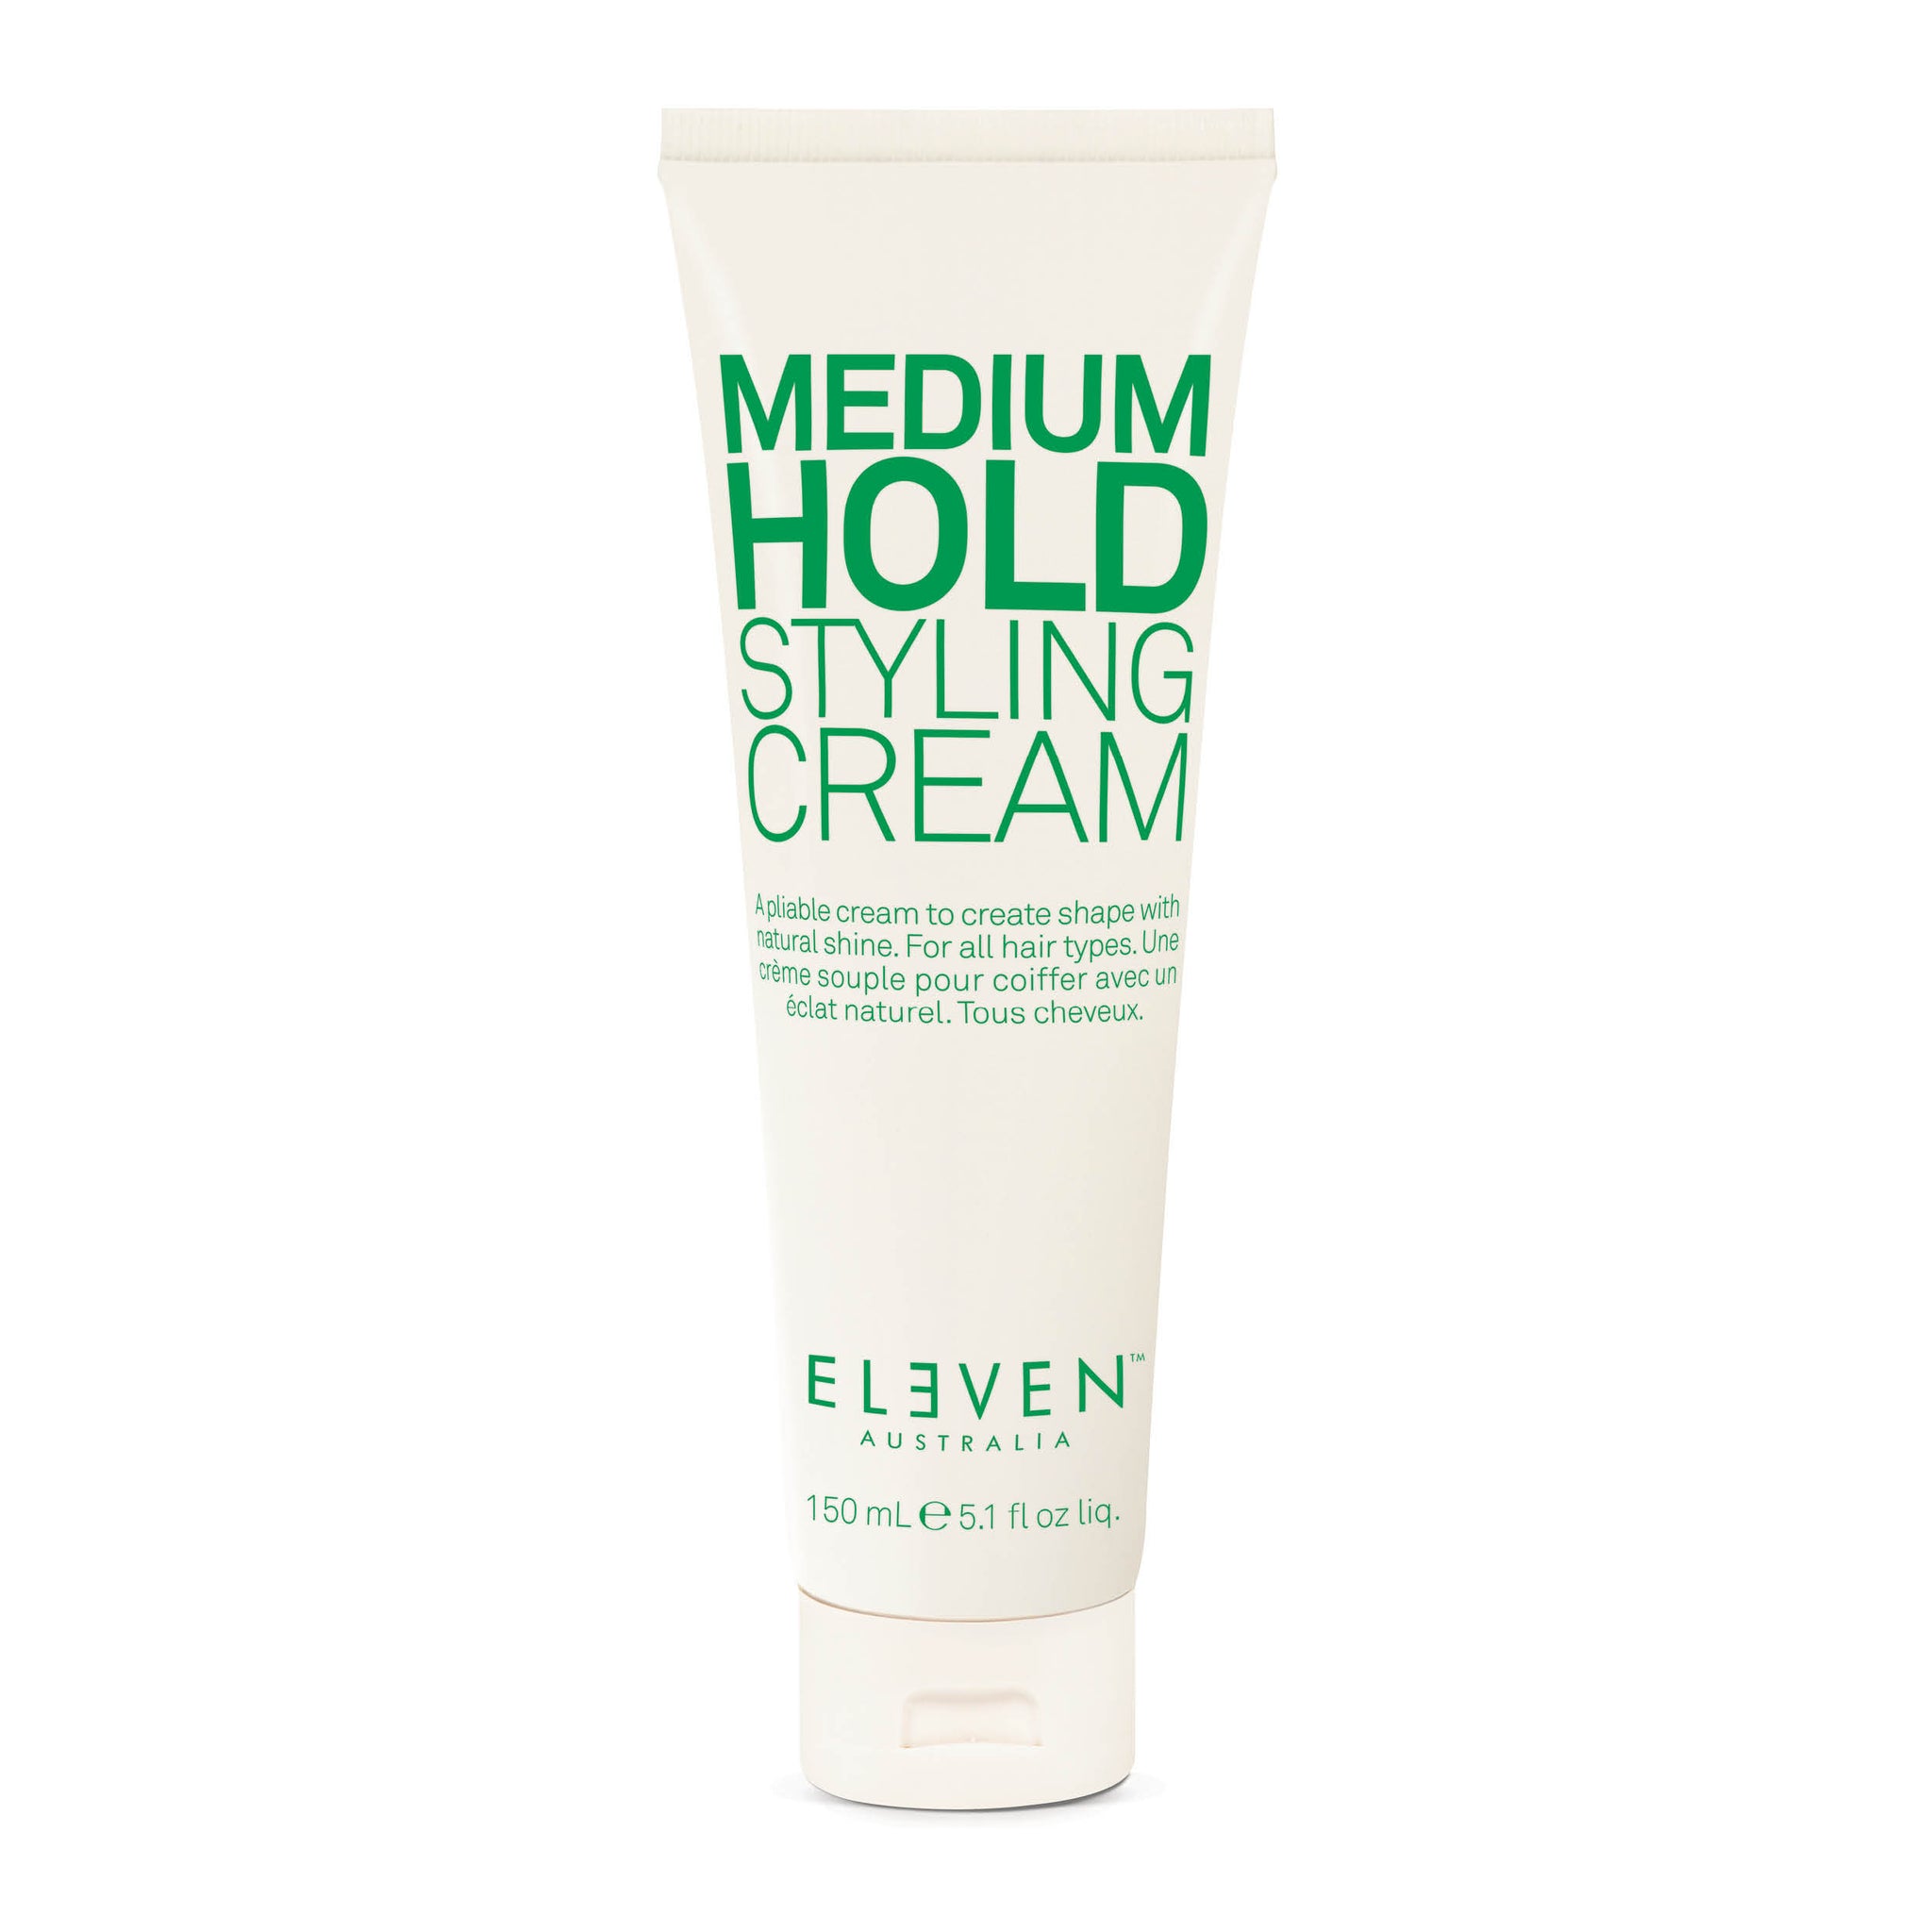 Eleven Medium Hold Styling Cream.